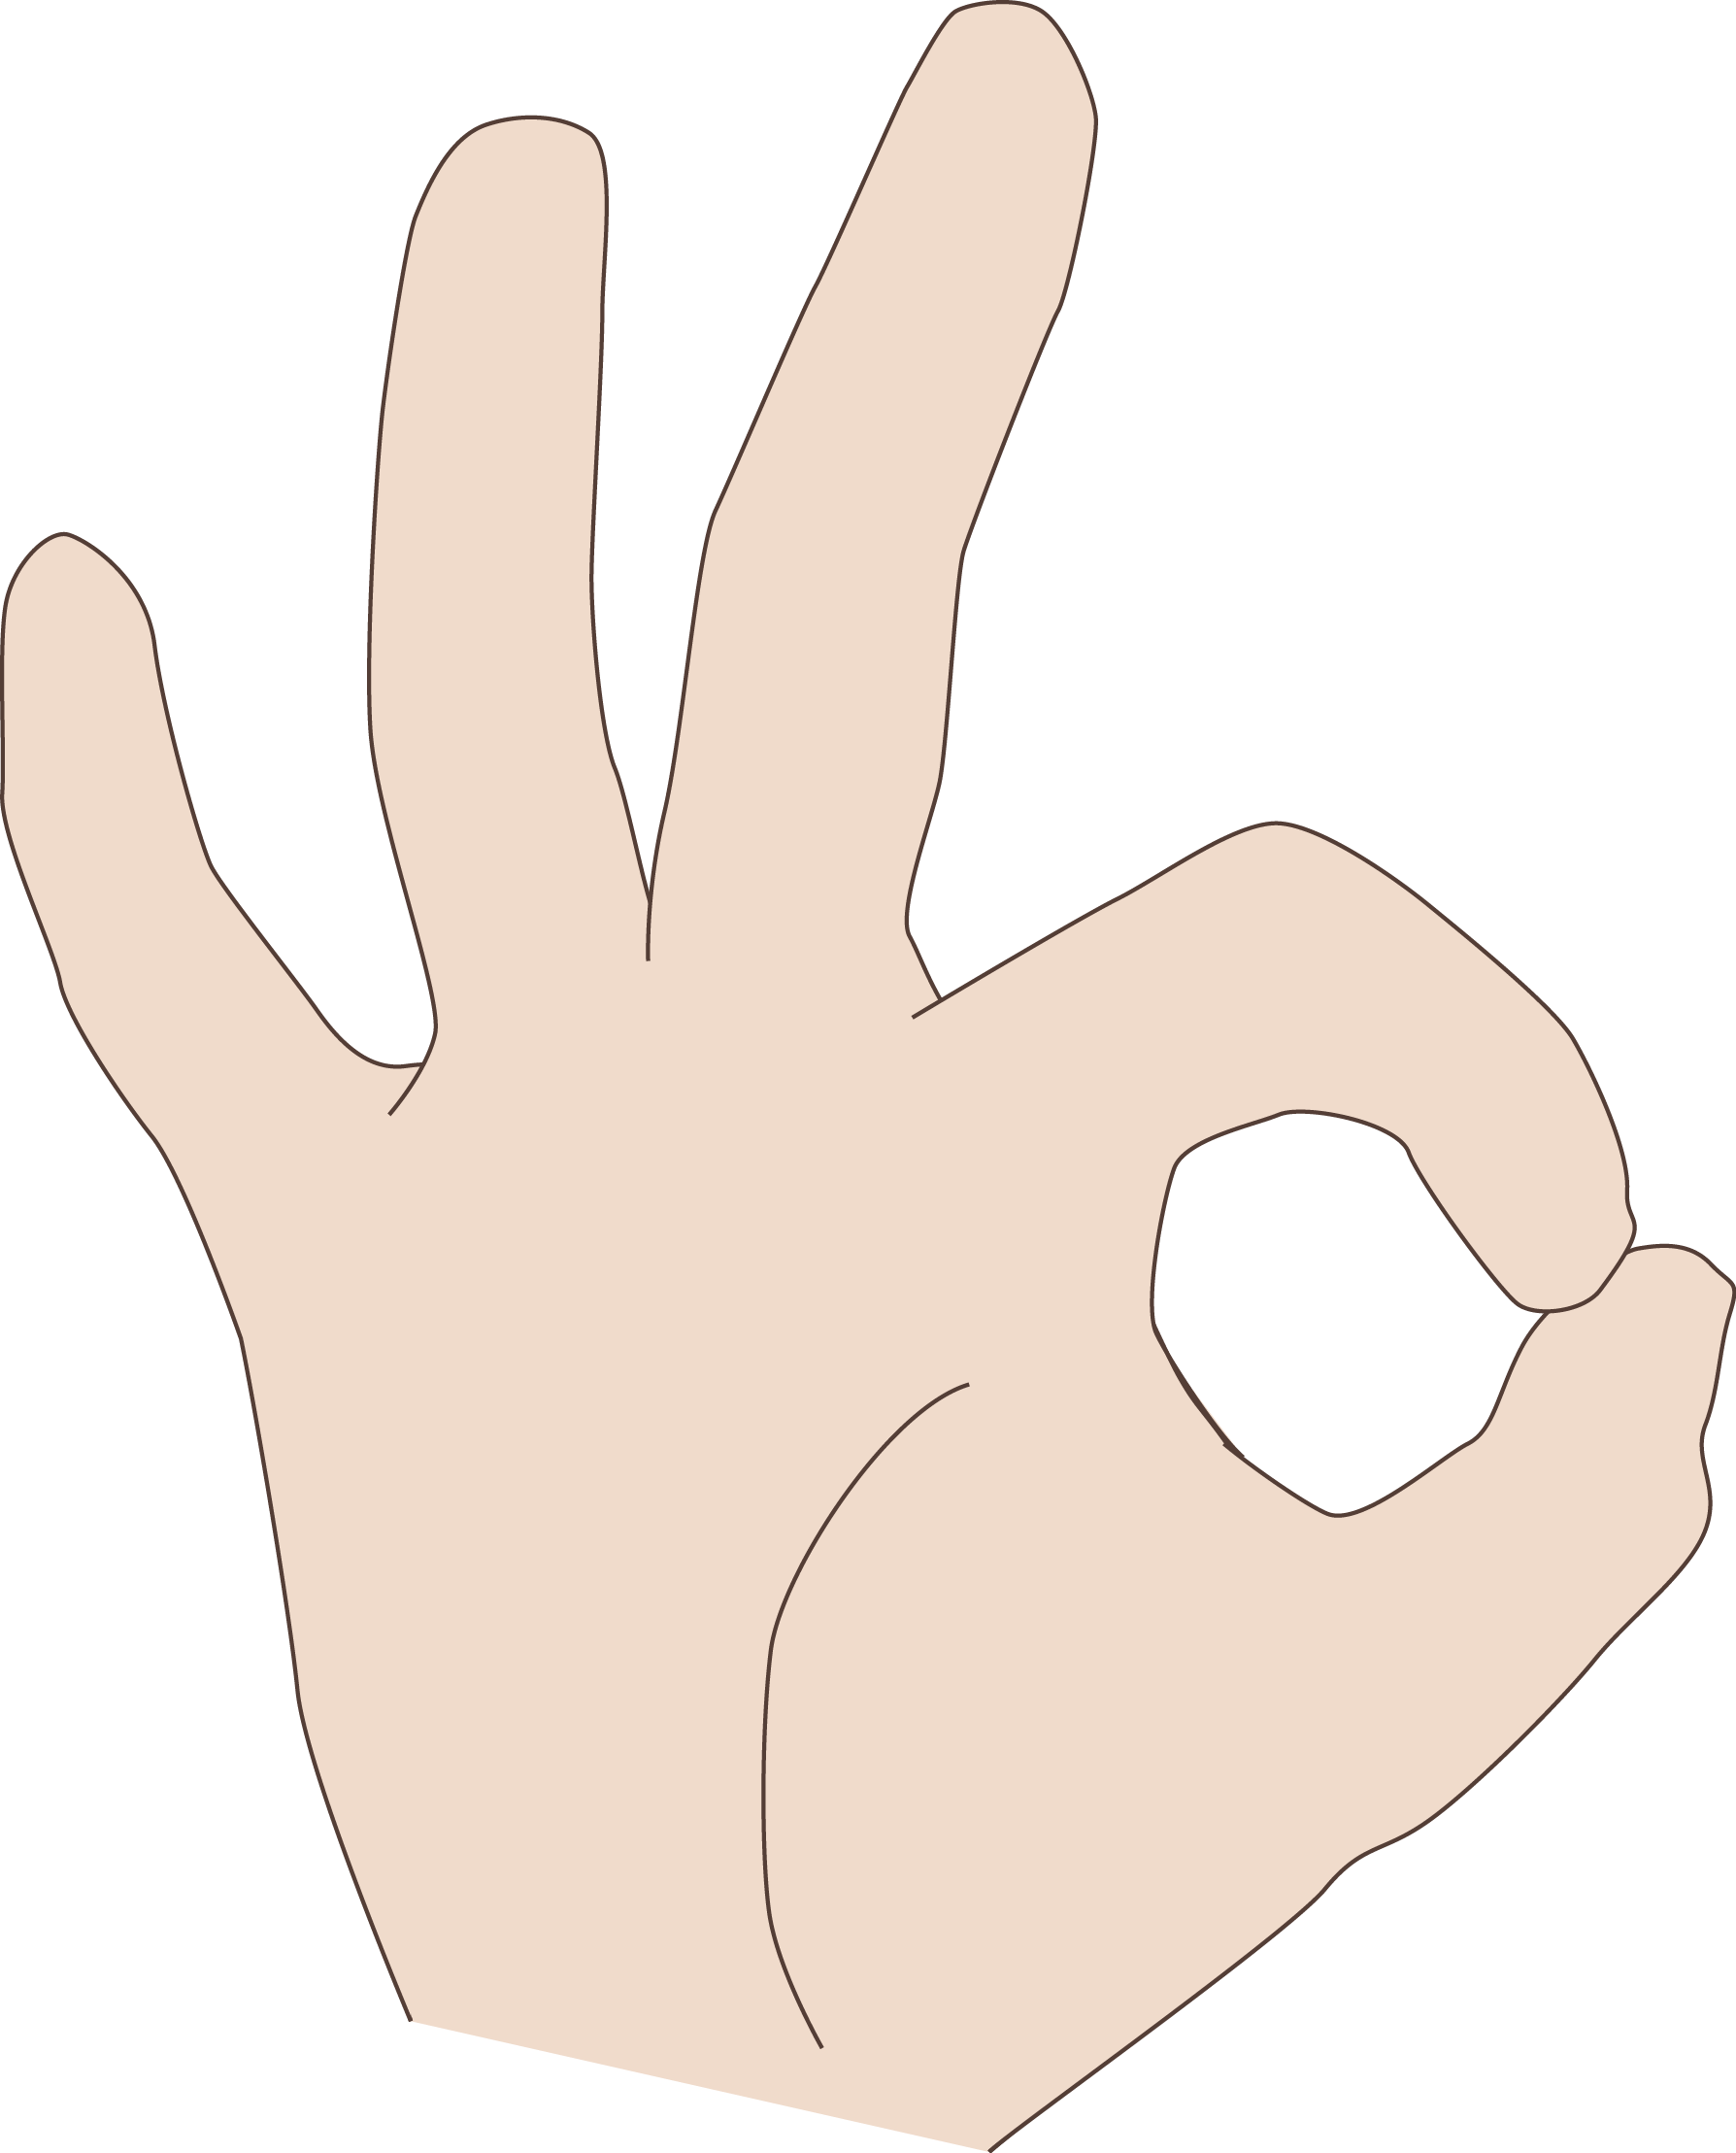 A Hand Making A Gesture